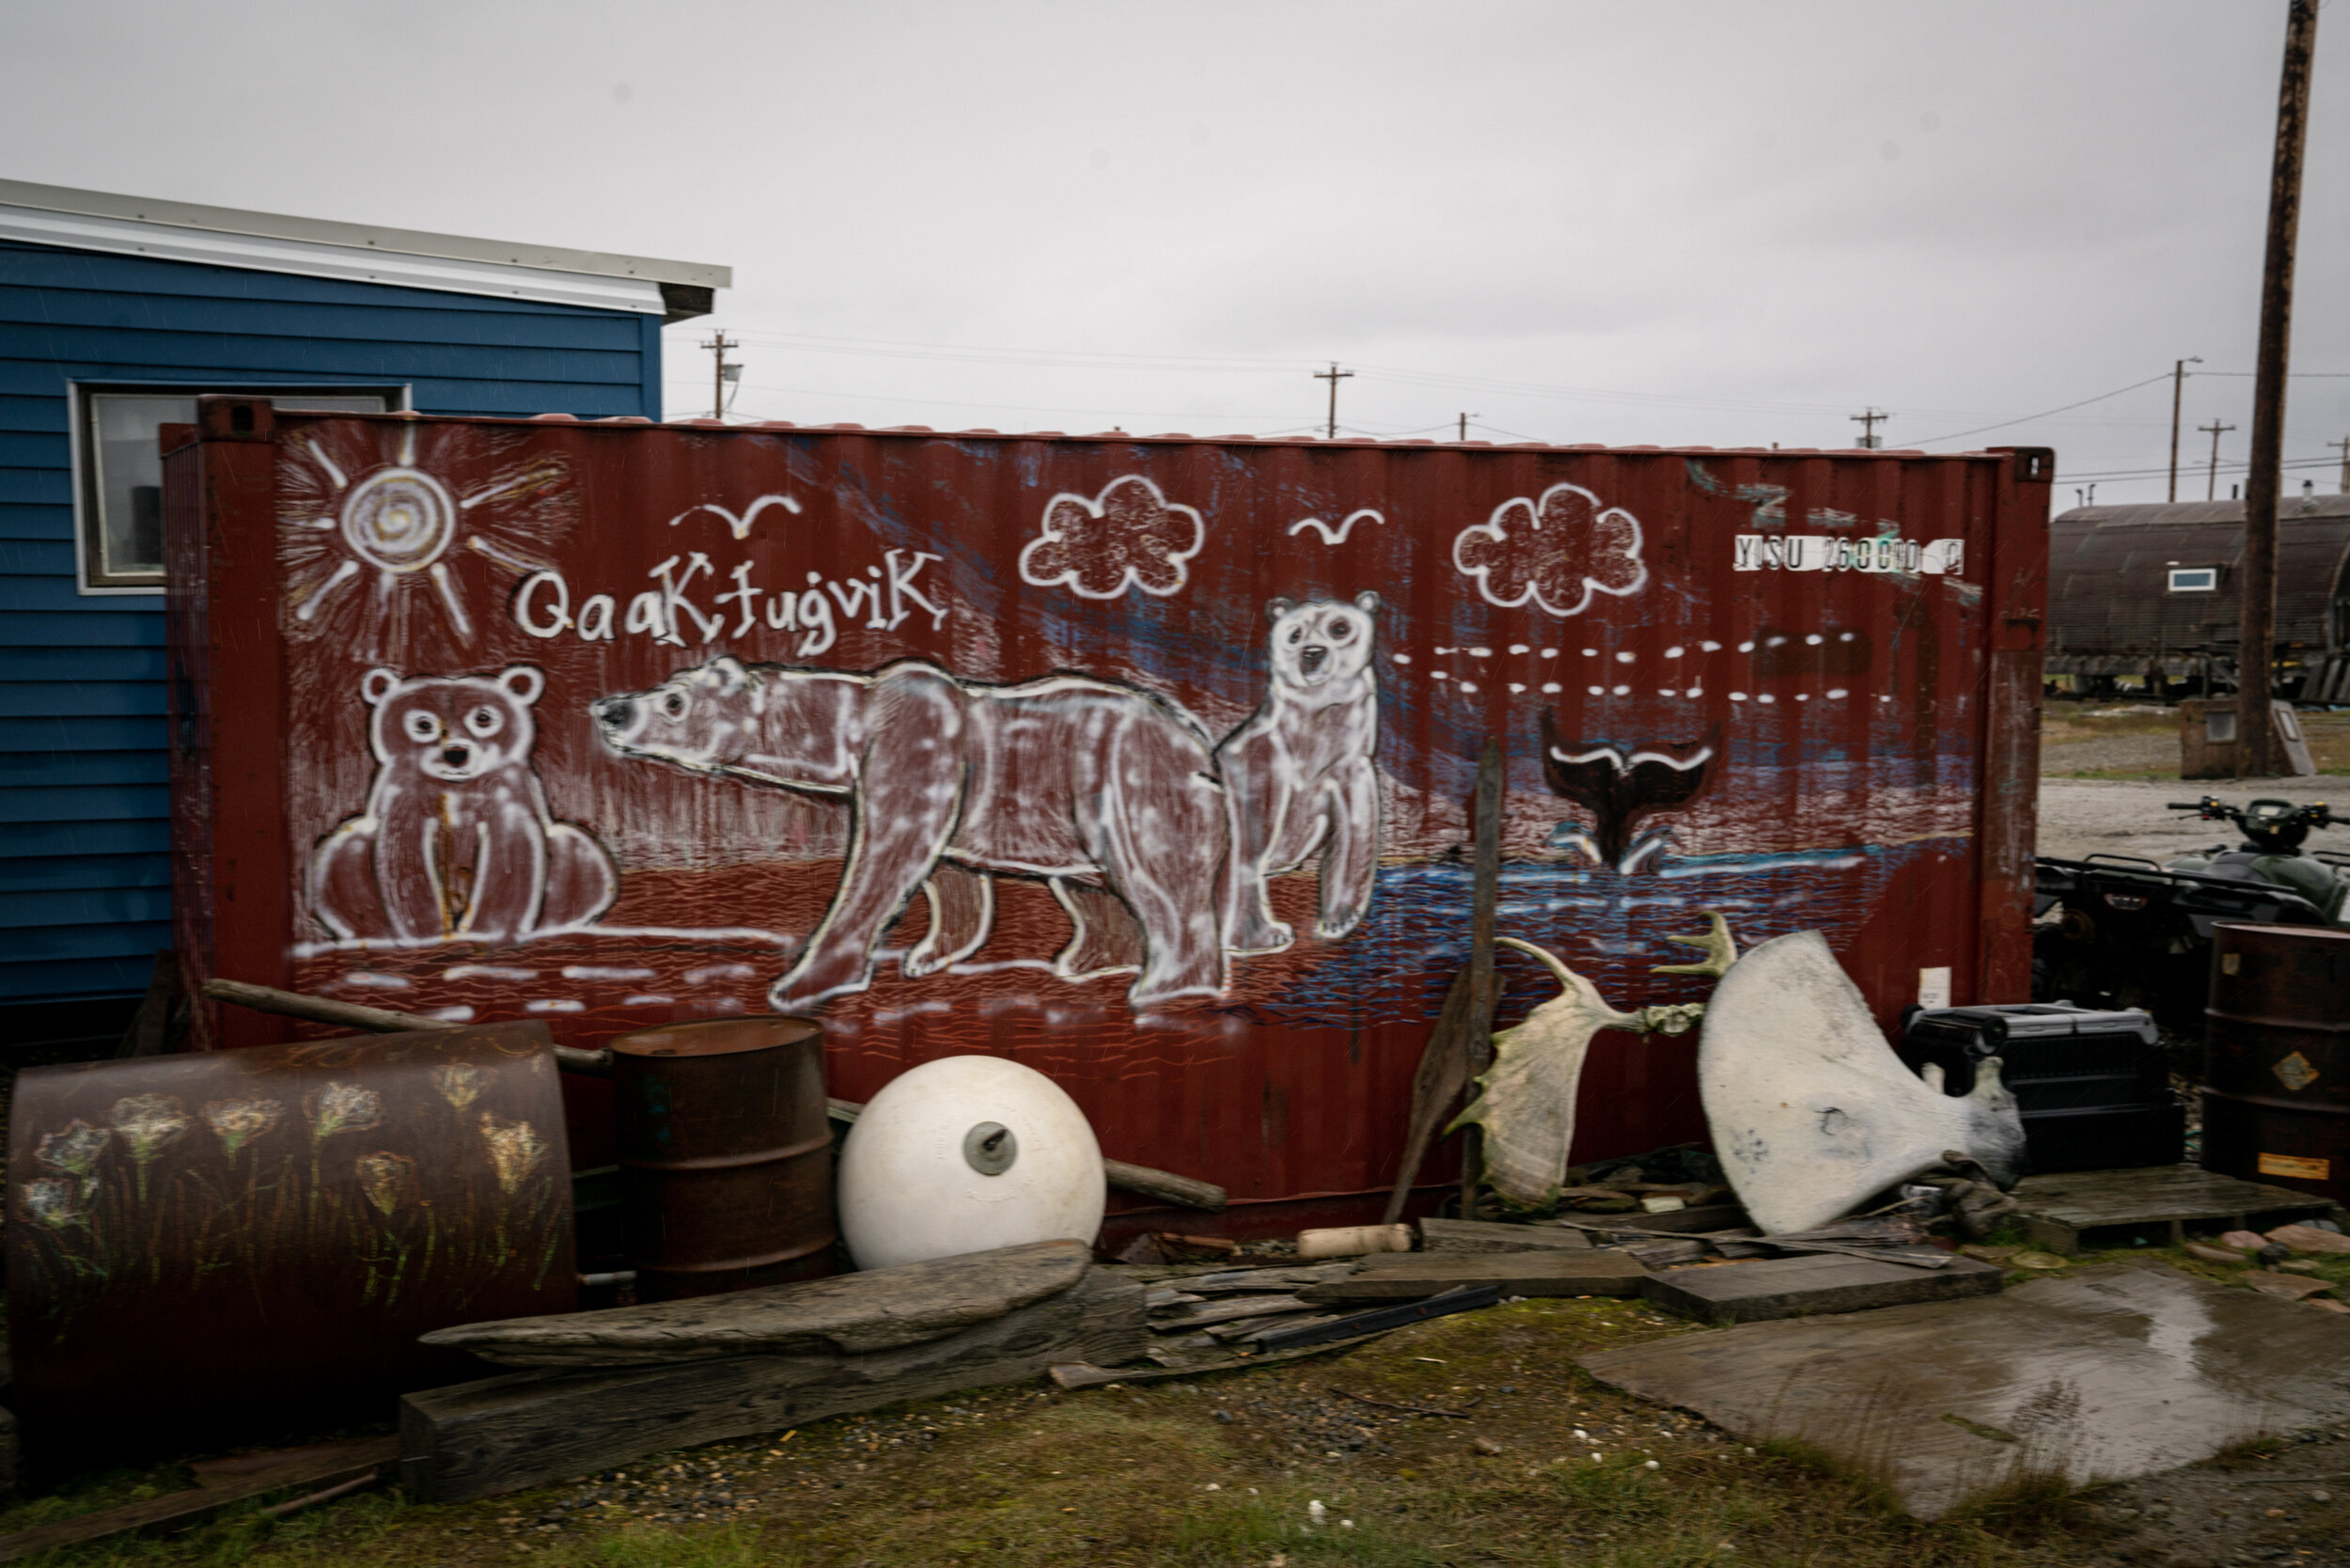 Graffiti of polar bear on cargo box.